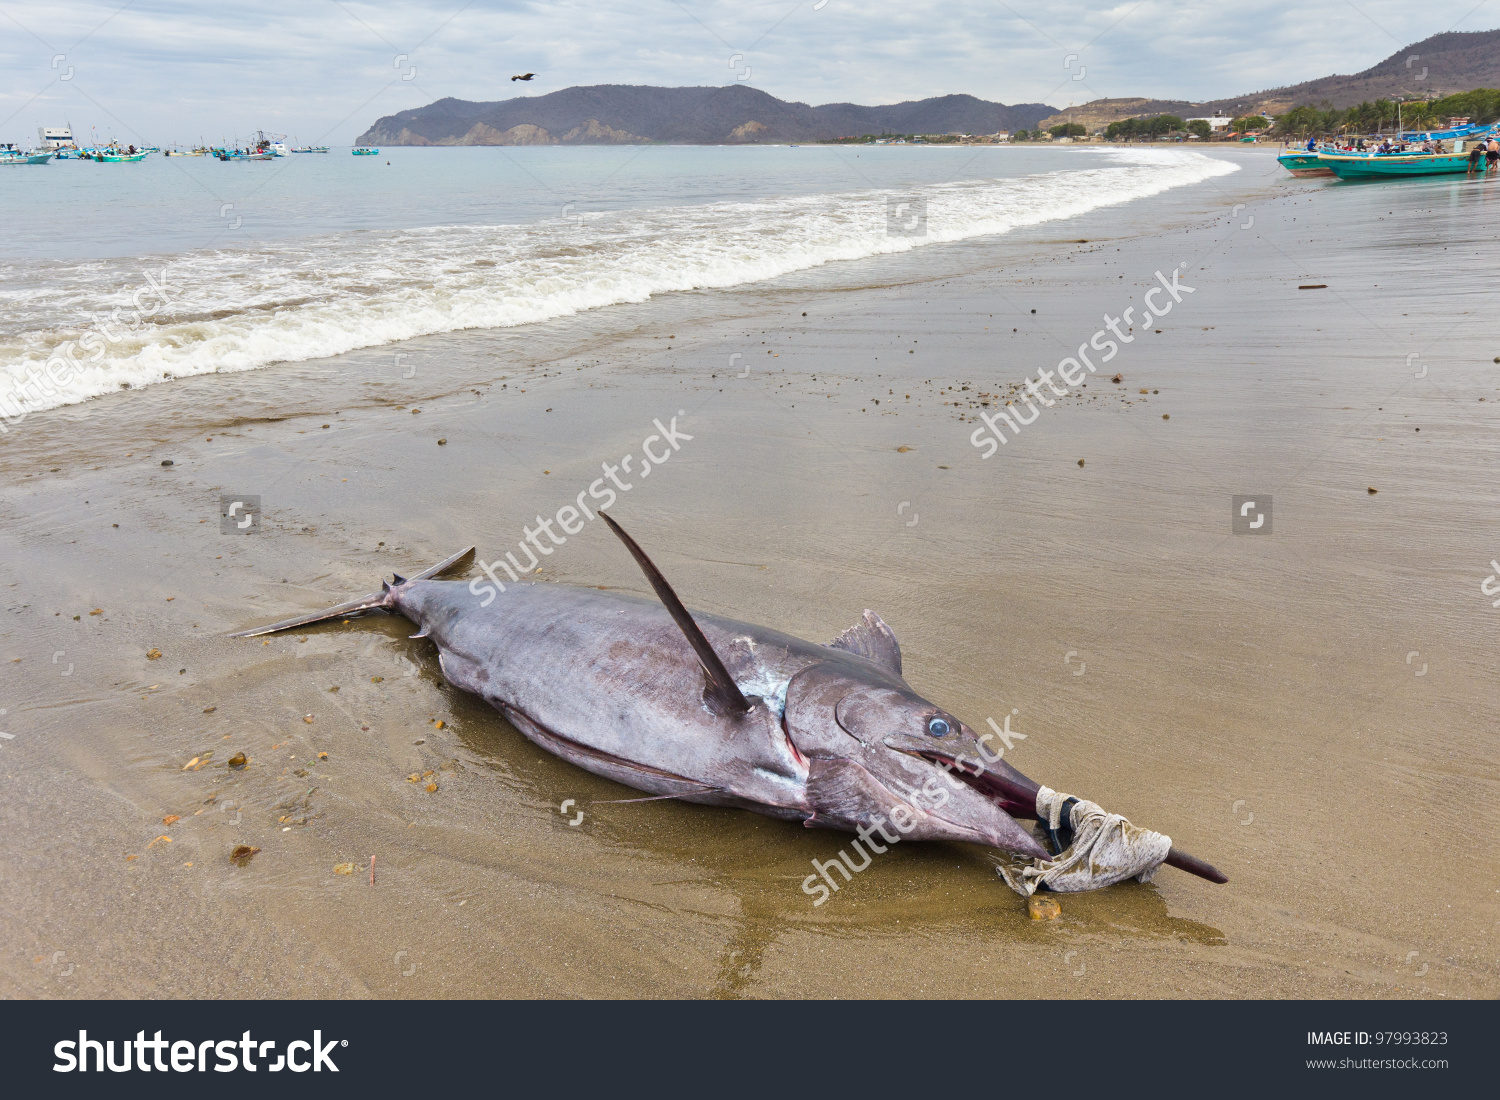 Swordfish Landed On Beach By Fishermen Stock Photo 97993823.